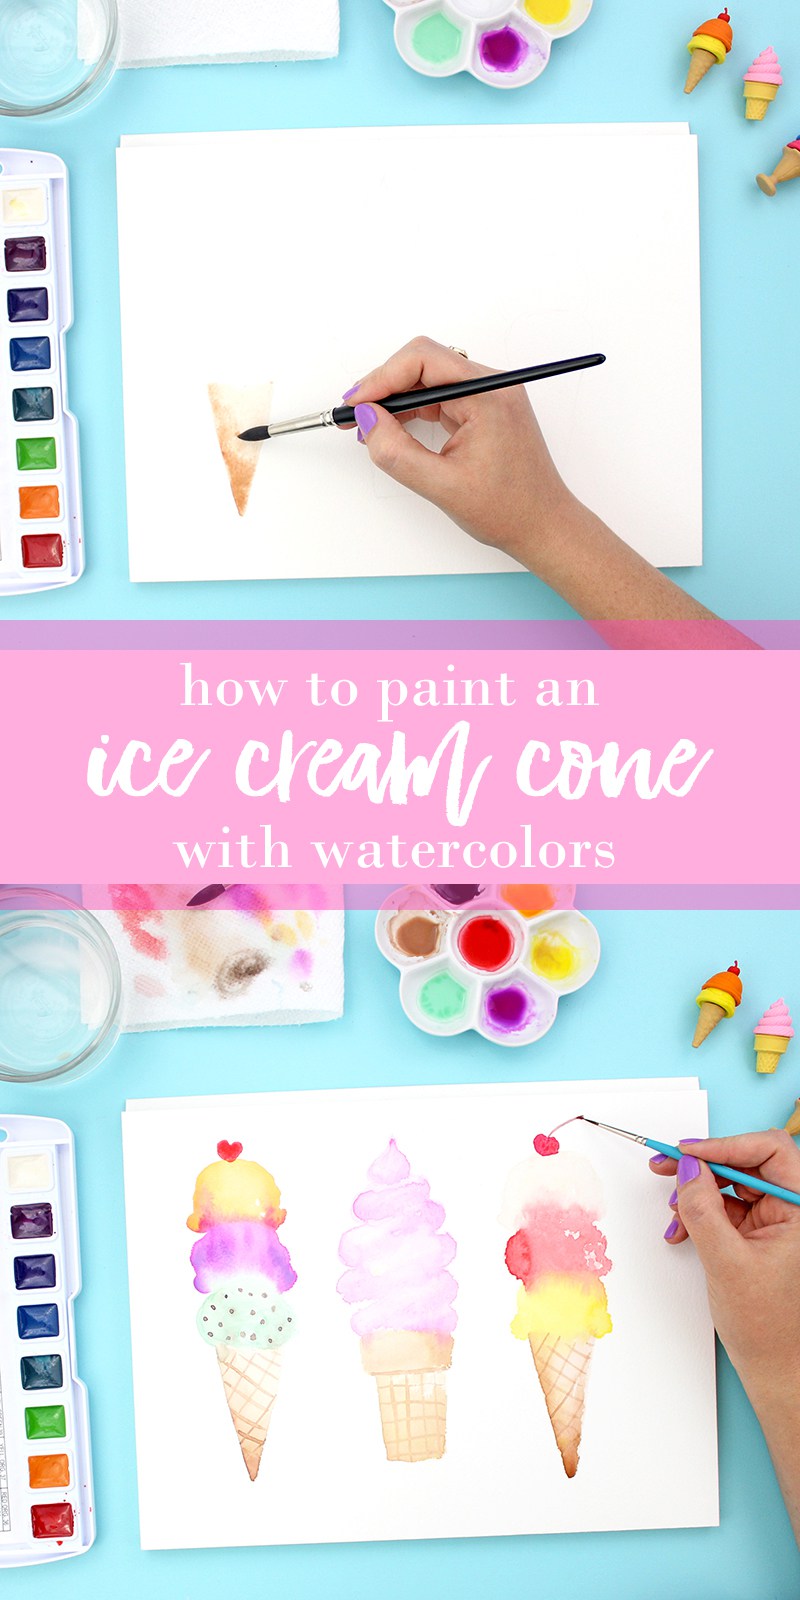 DIY watercolor ice cream cones (via www.linesacross.com)